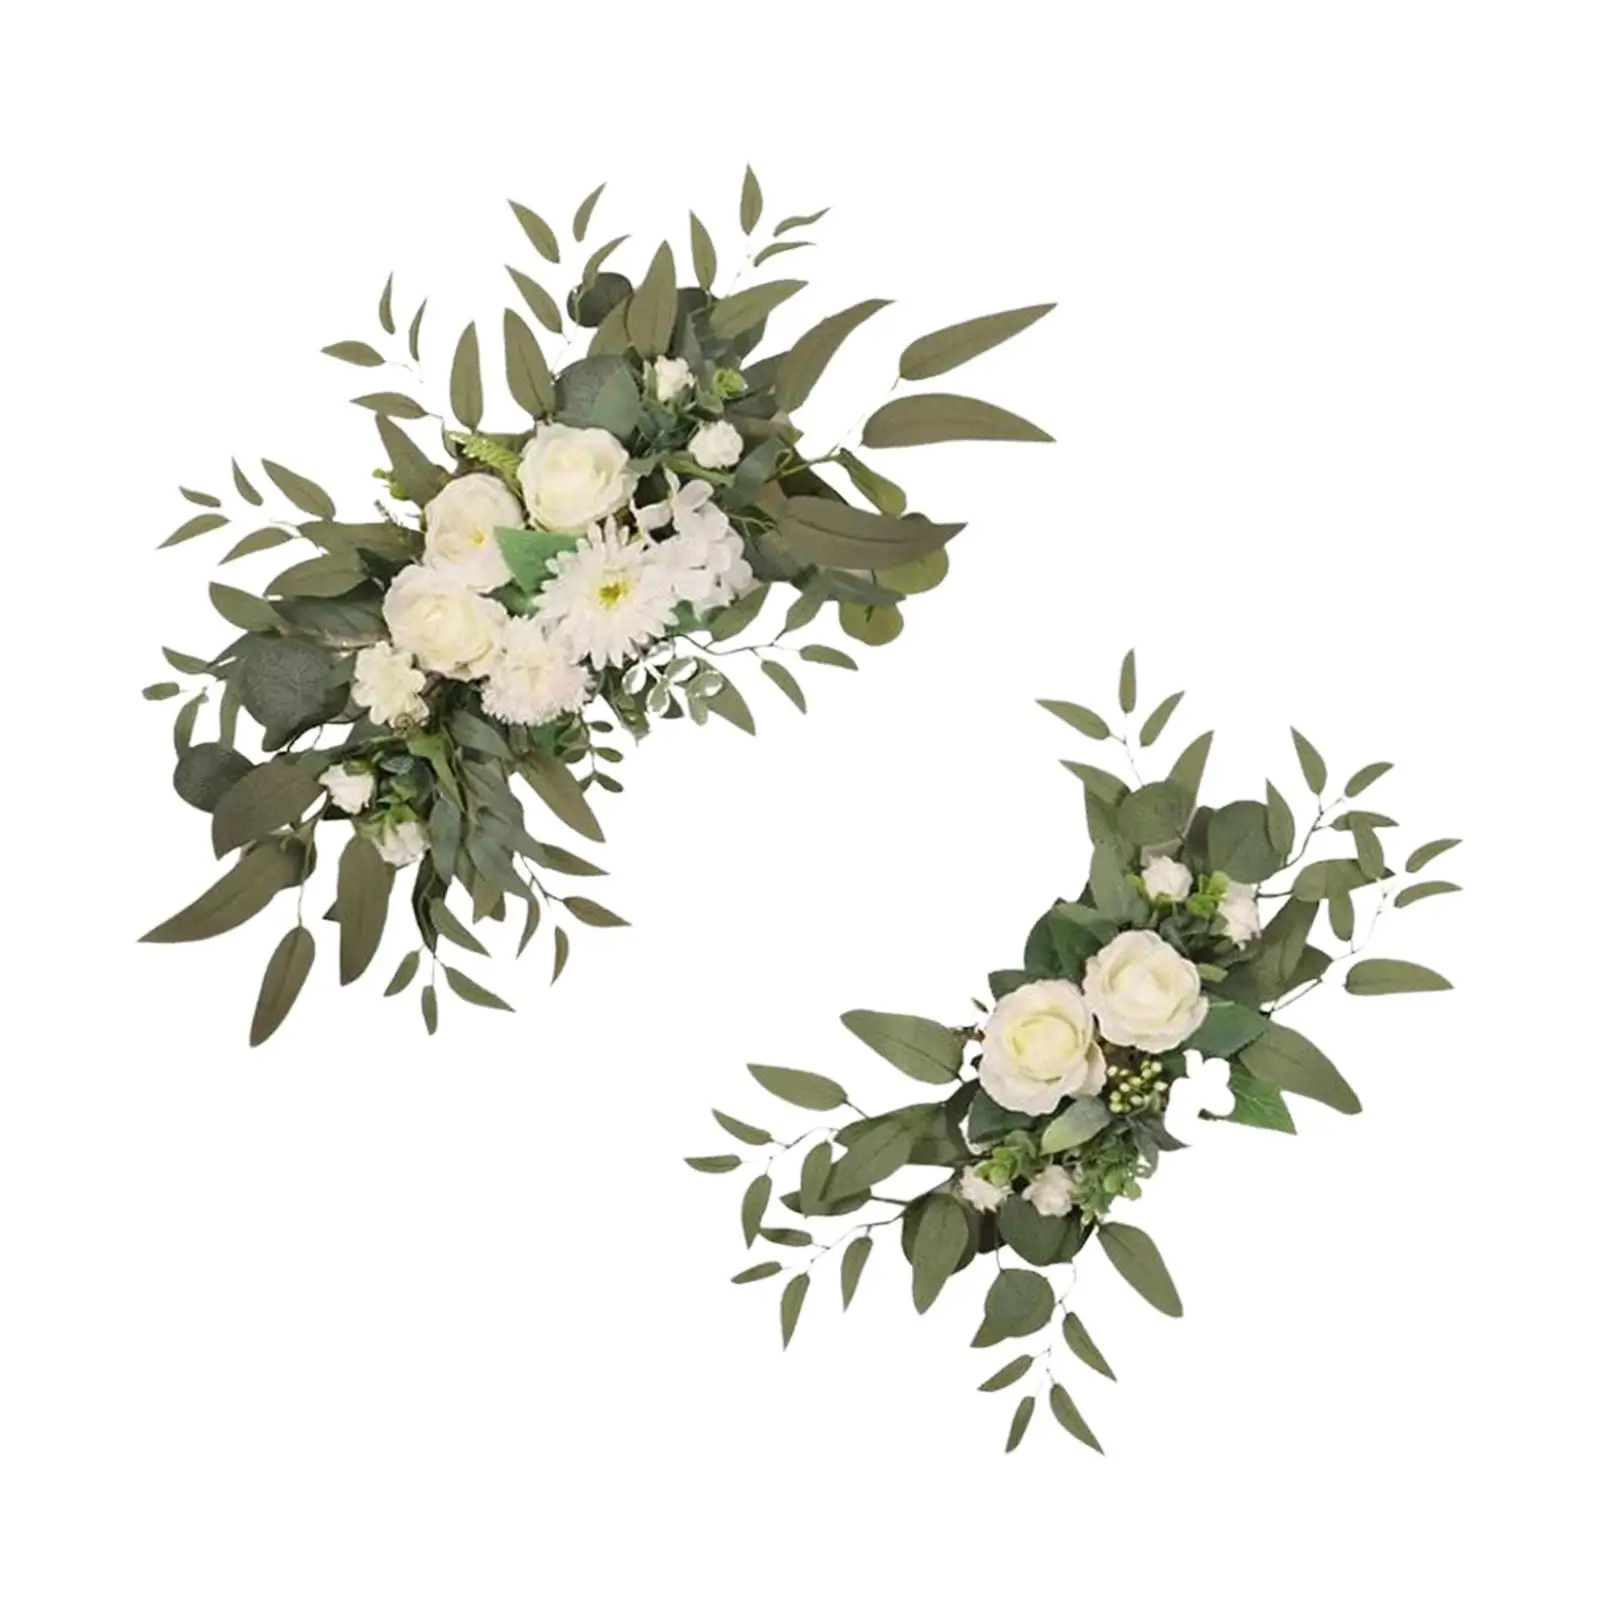 2 Pieces Artificial Wedding Arch Flowers Elegant Weddings Decorative Floral Swag for Front Door Ceremony Decor